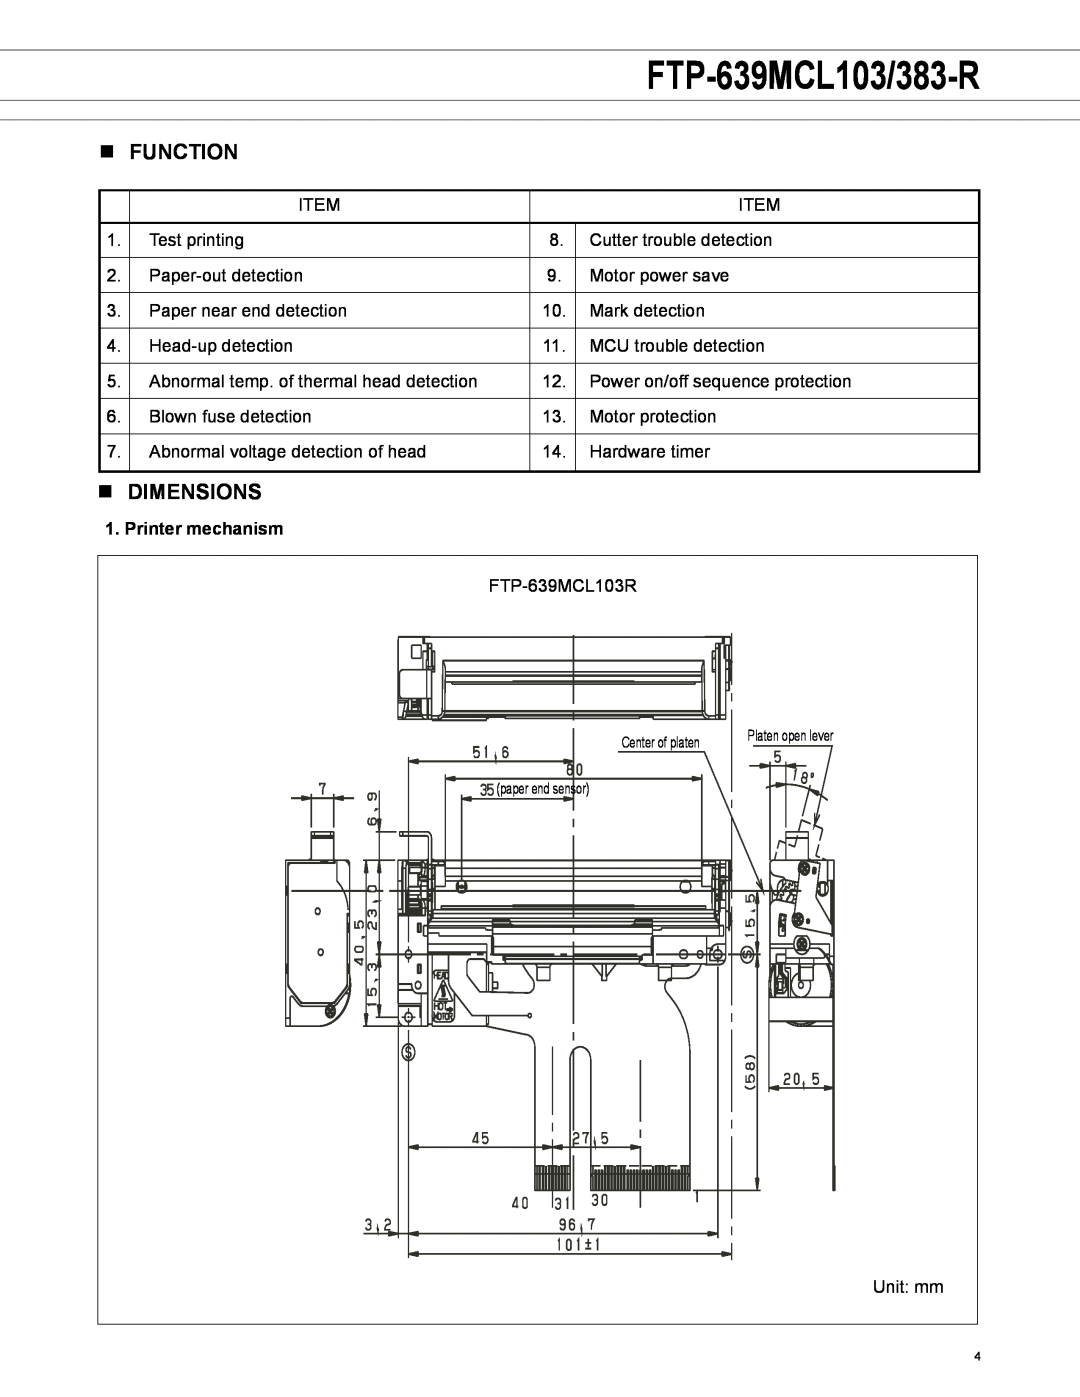 Fujitsu FTP-639MCL103/383-R manual n Function, n Dimensions, Printer mechanism 